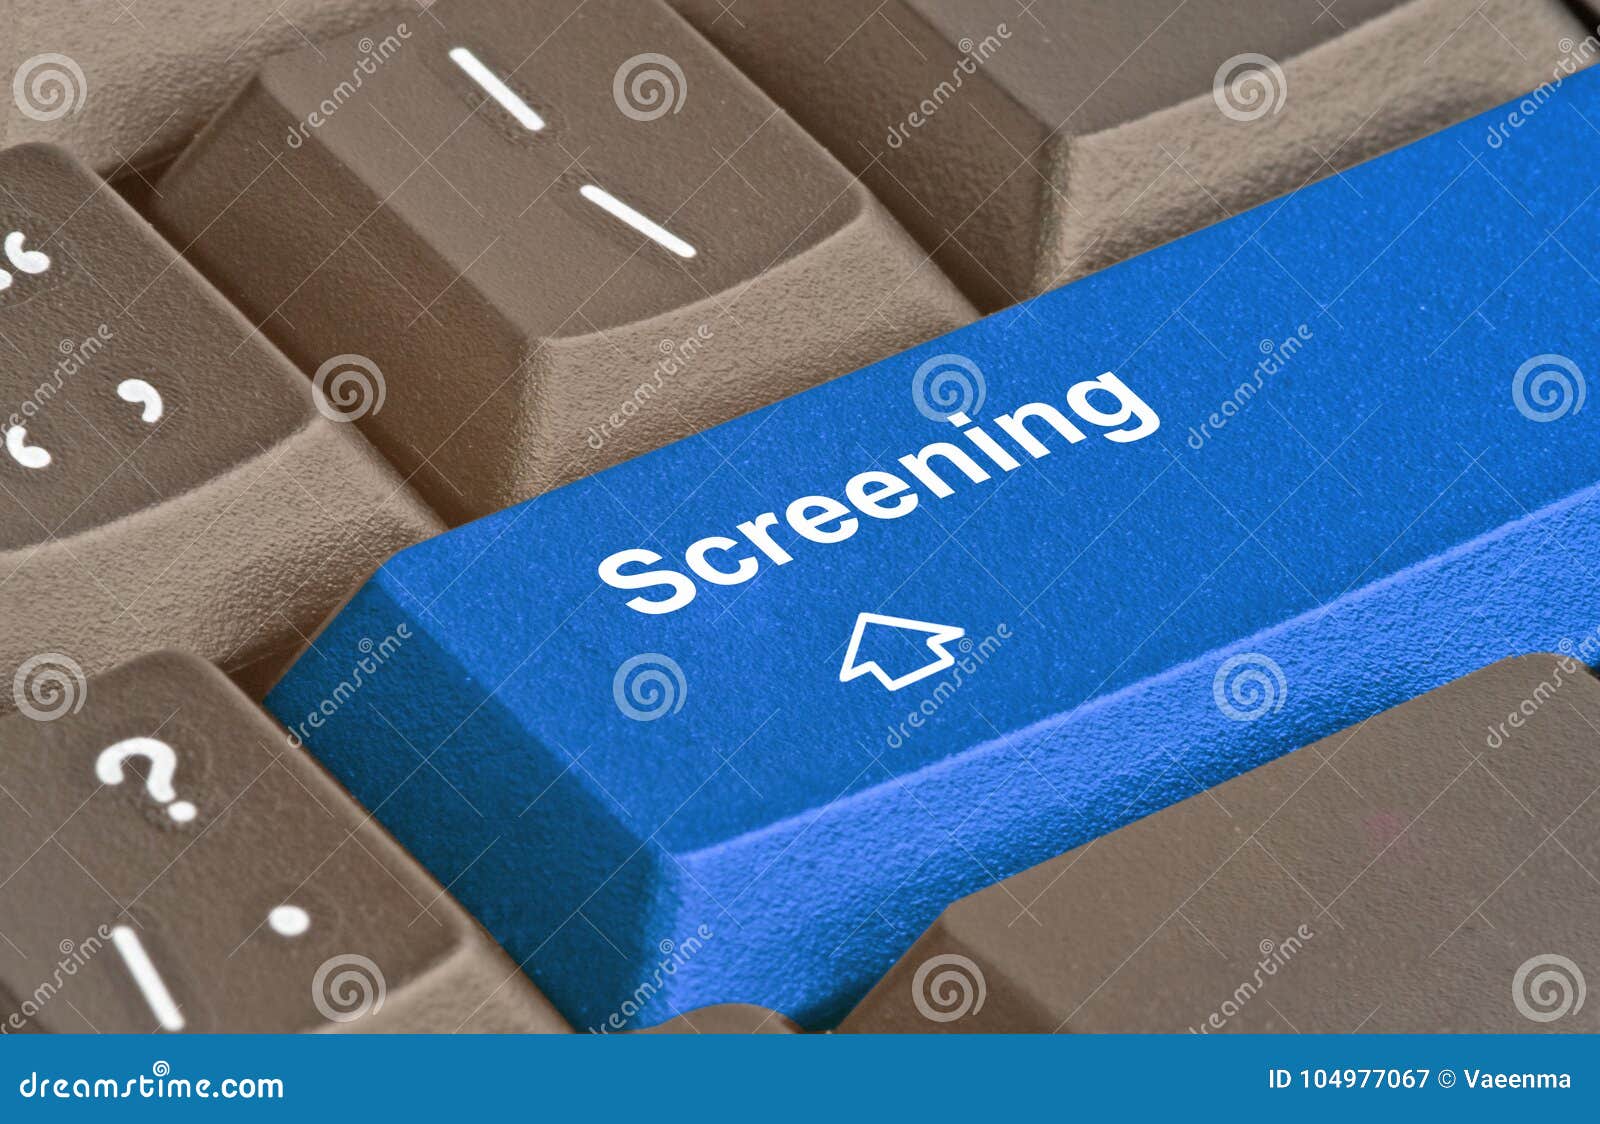 key for screening